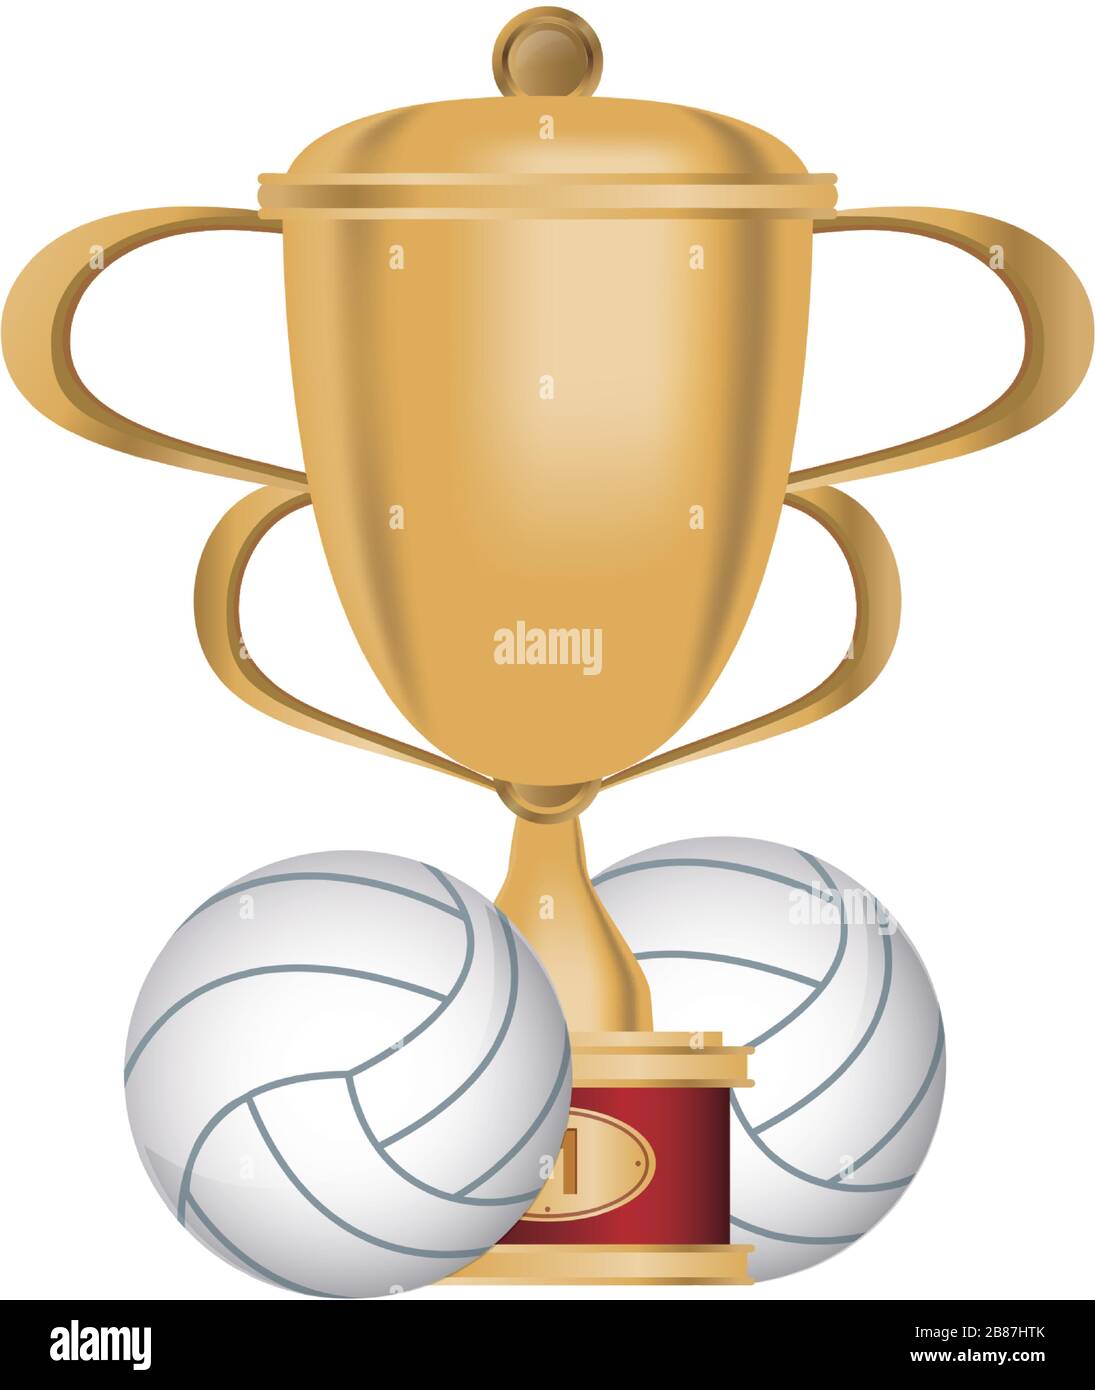 balón de voleibol deporte con copa de trofeo Imagen Vector de stock - Alamy